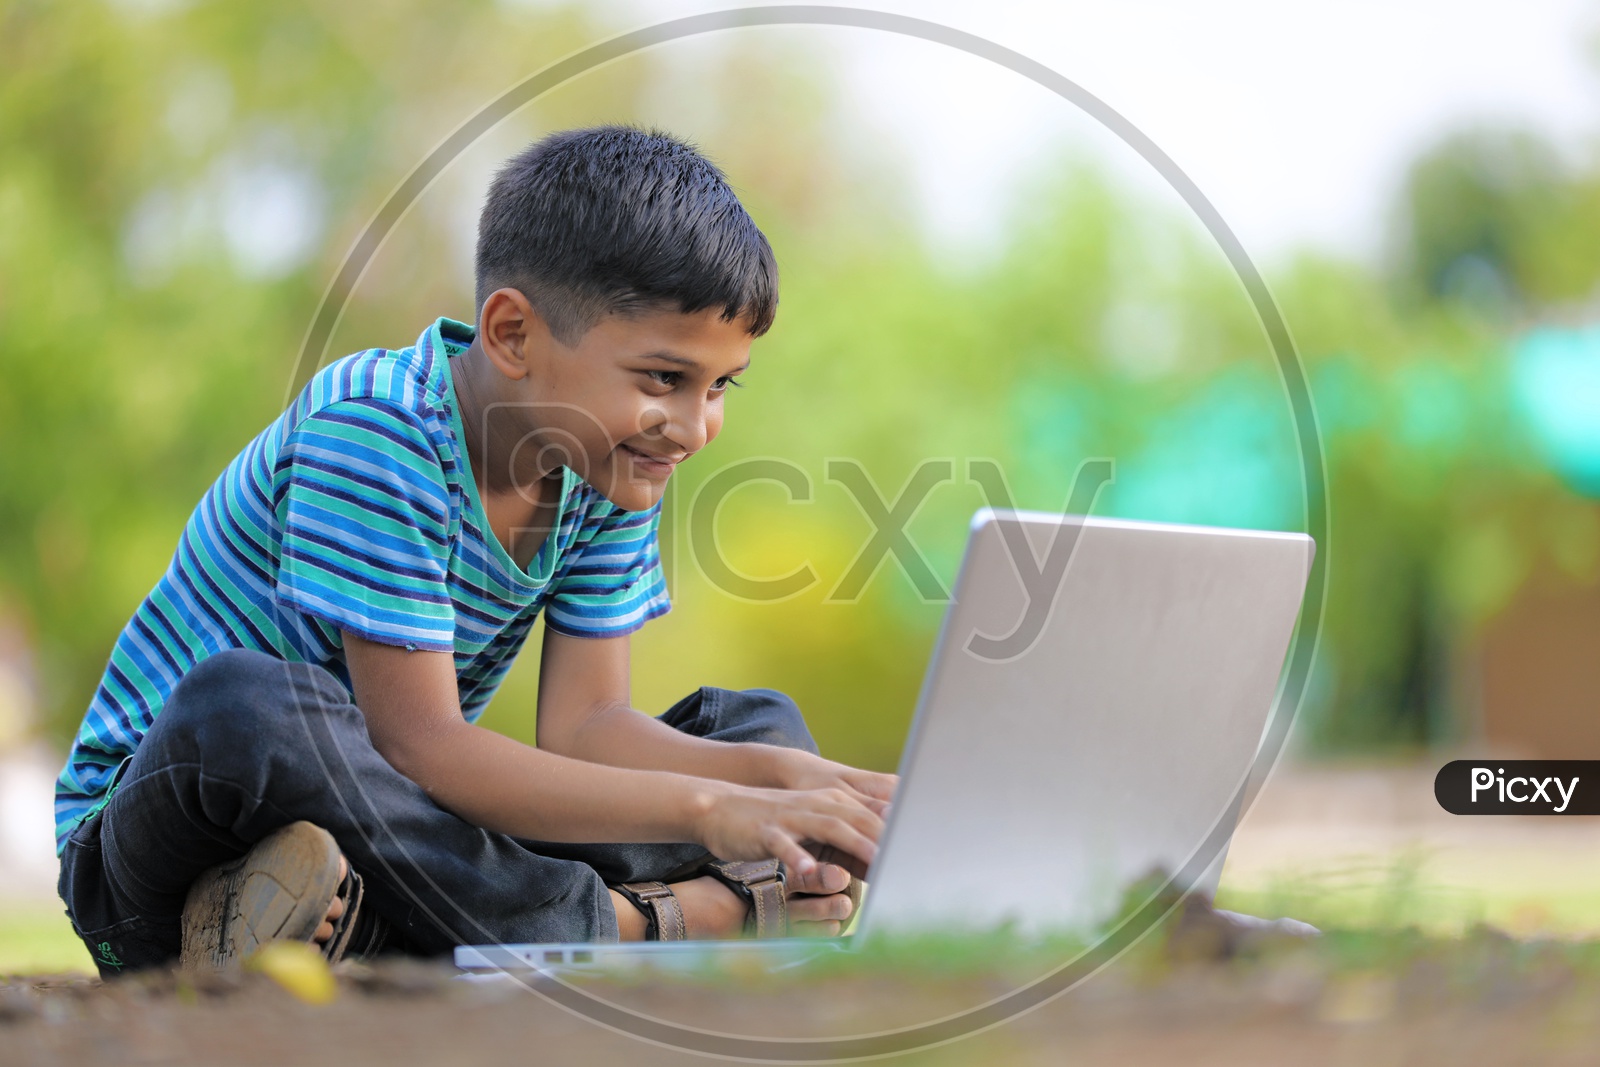 Indian Child using Laptop